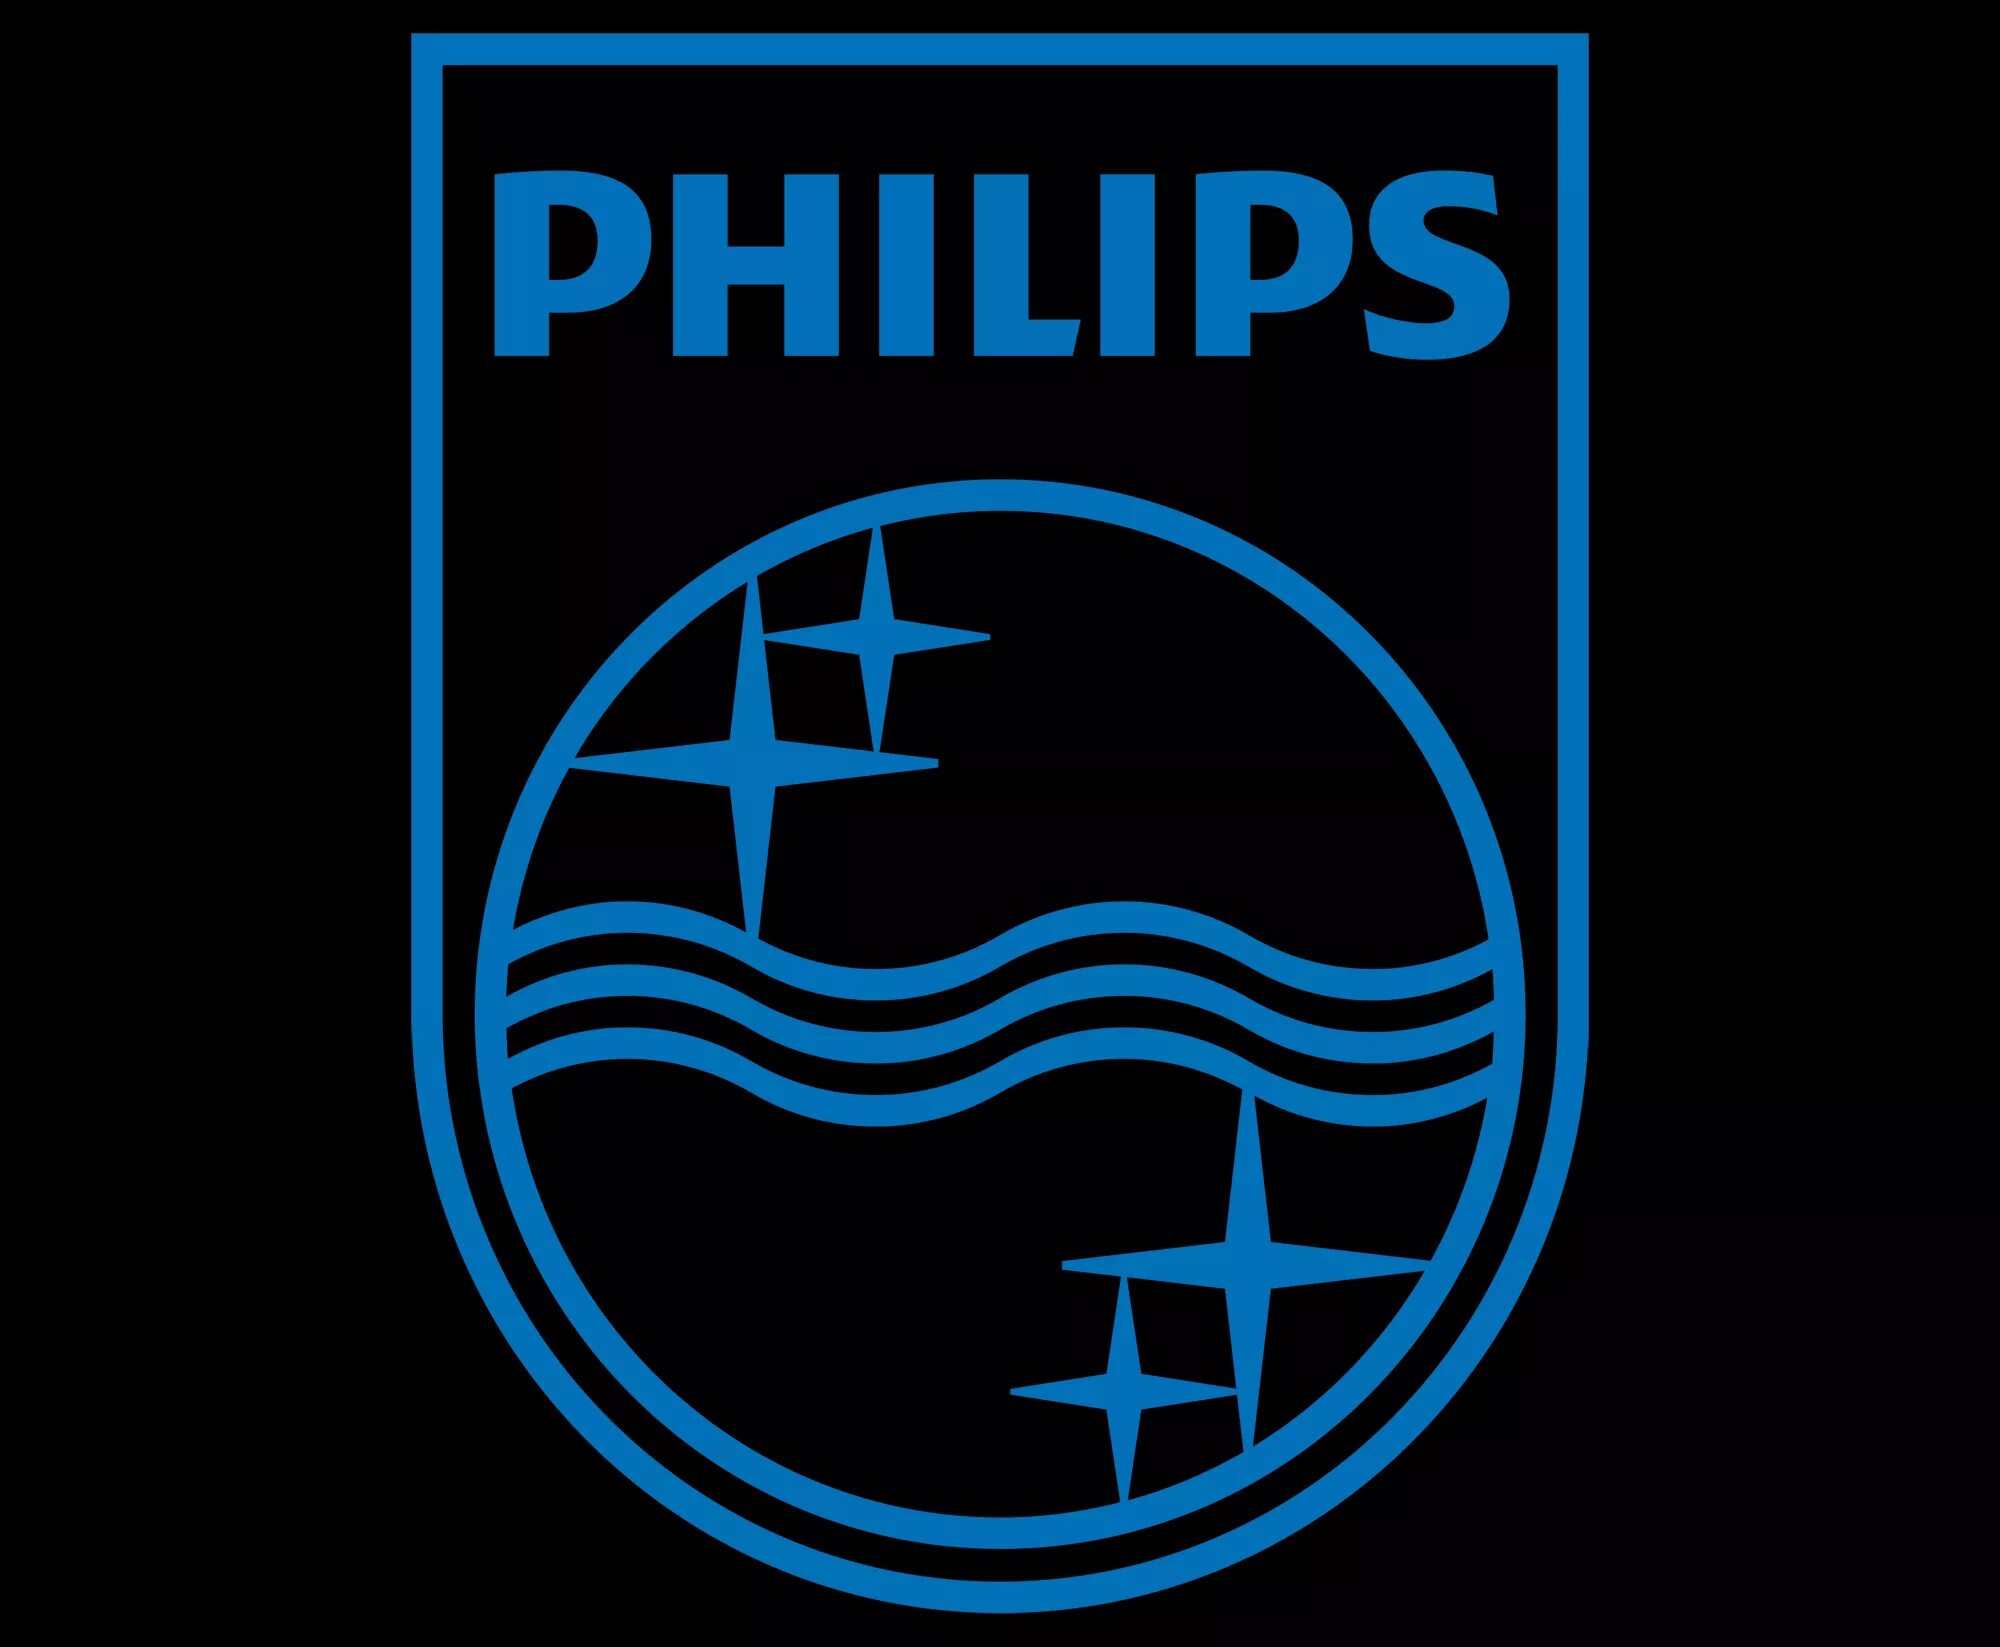 Сайт филипс россия. Эмблема Филипс. Логотипы фирм Philips. Филипс надпись. Пхилипс логотип.